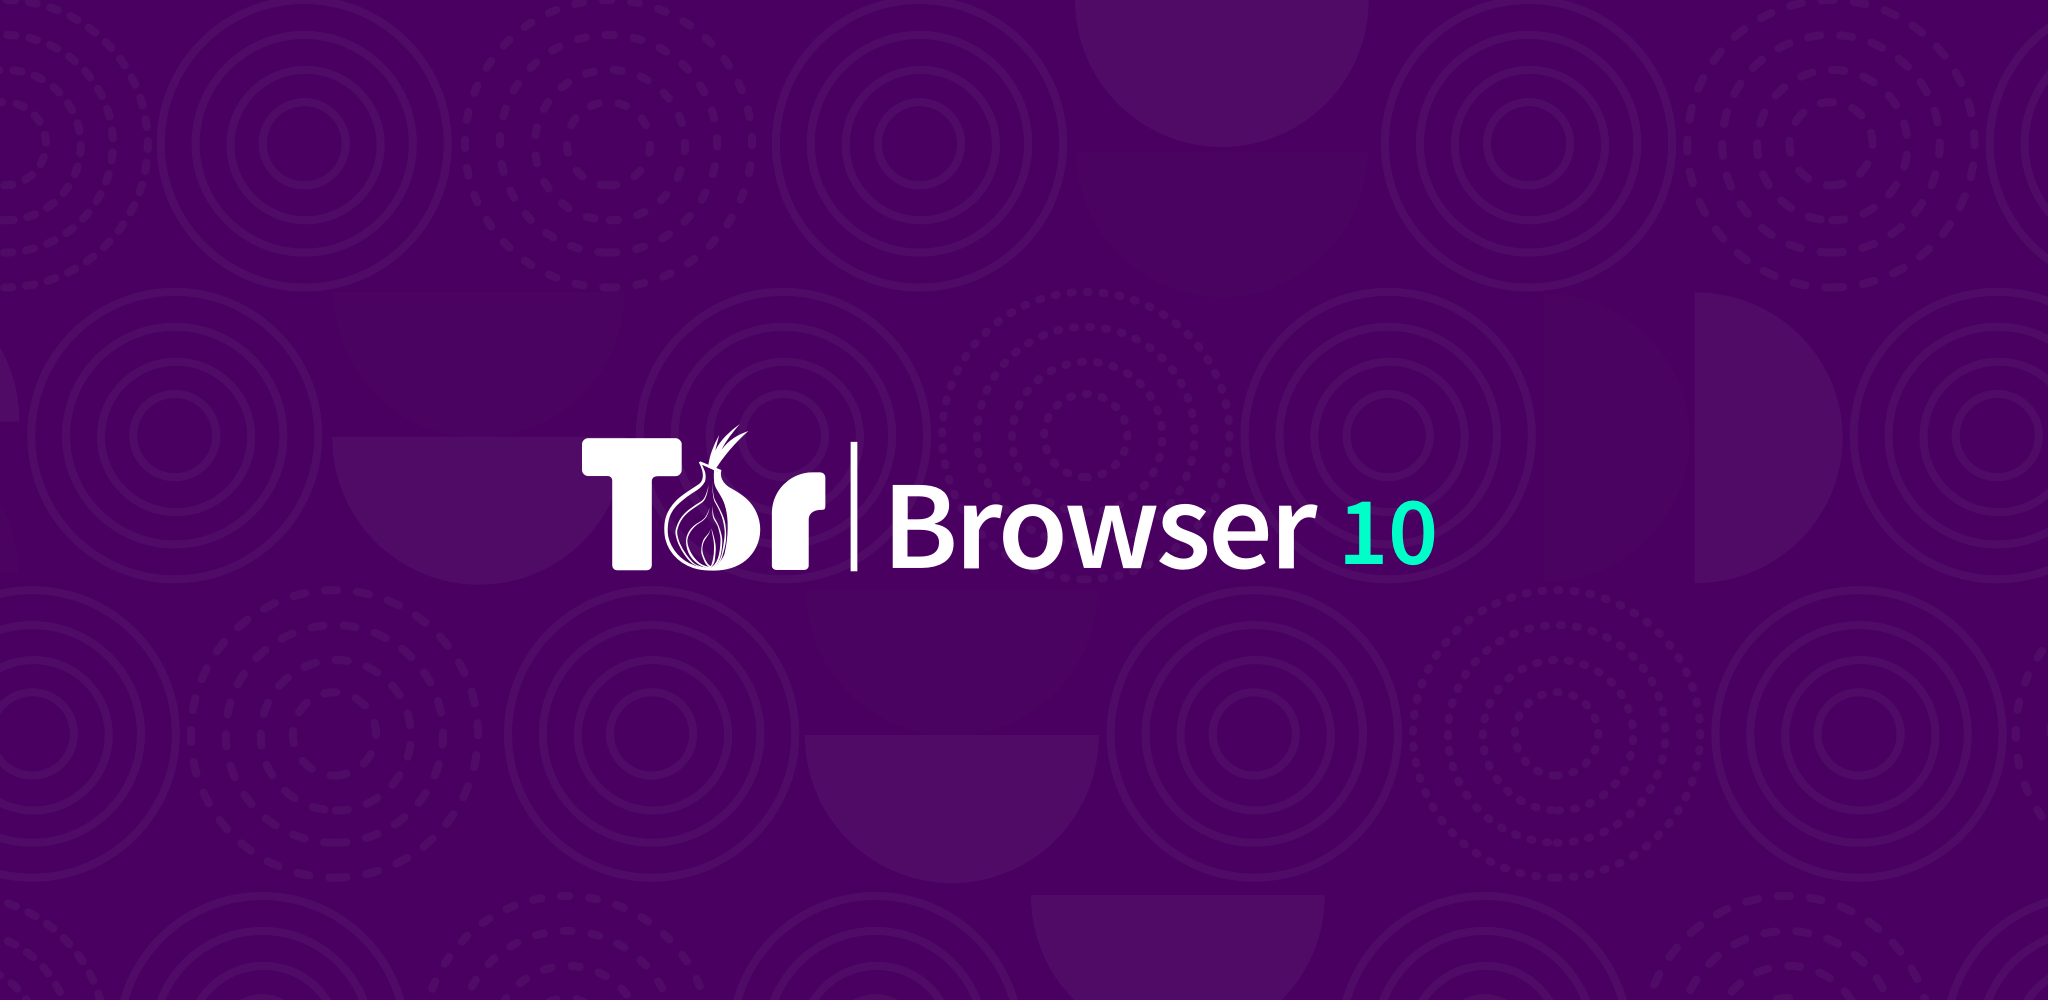 tor browser firefox android gidra